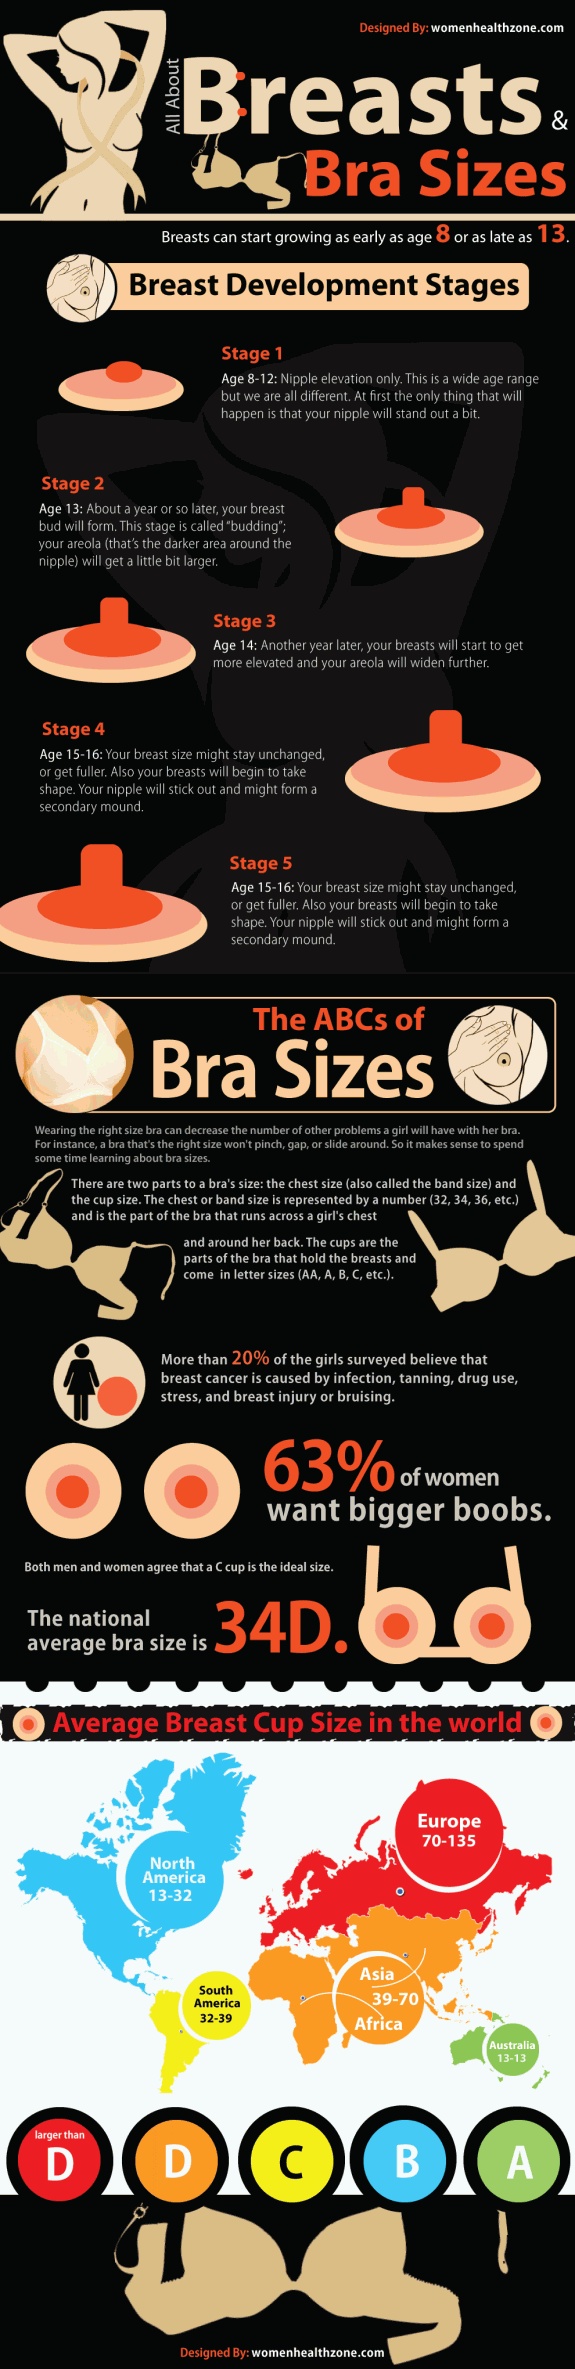 Breast Size Info-graphic